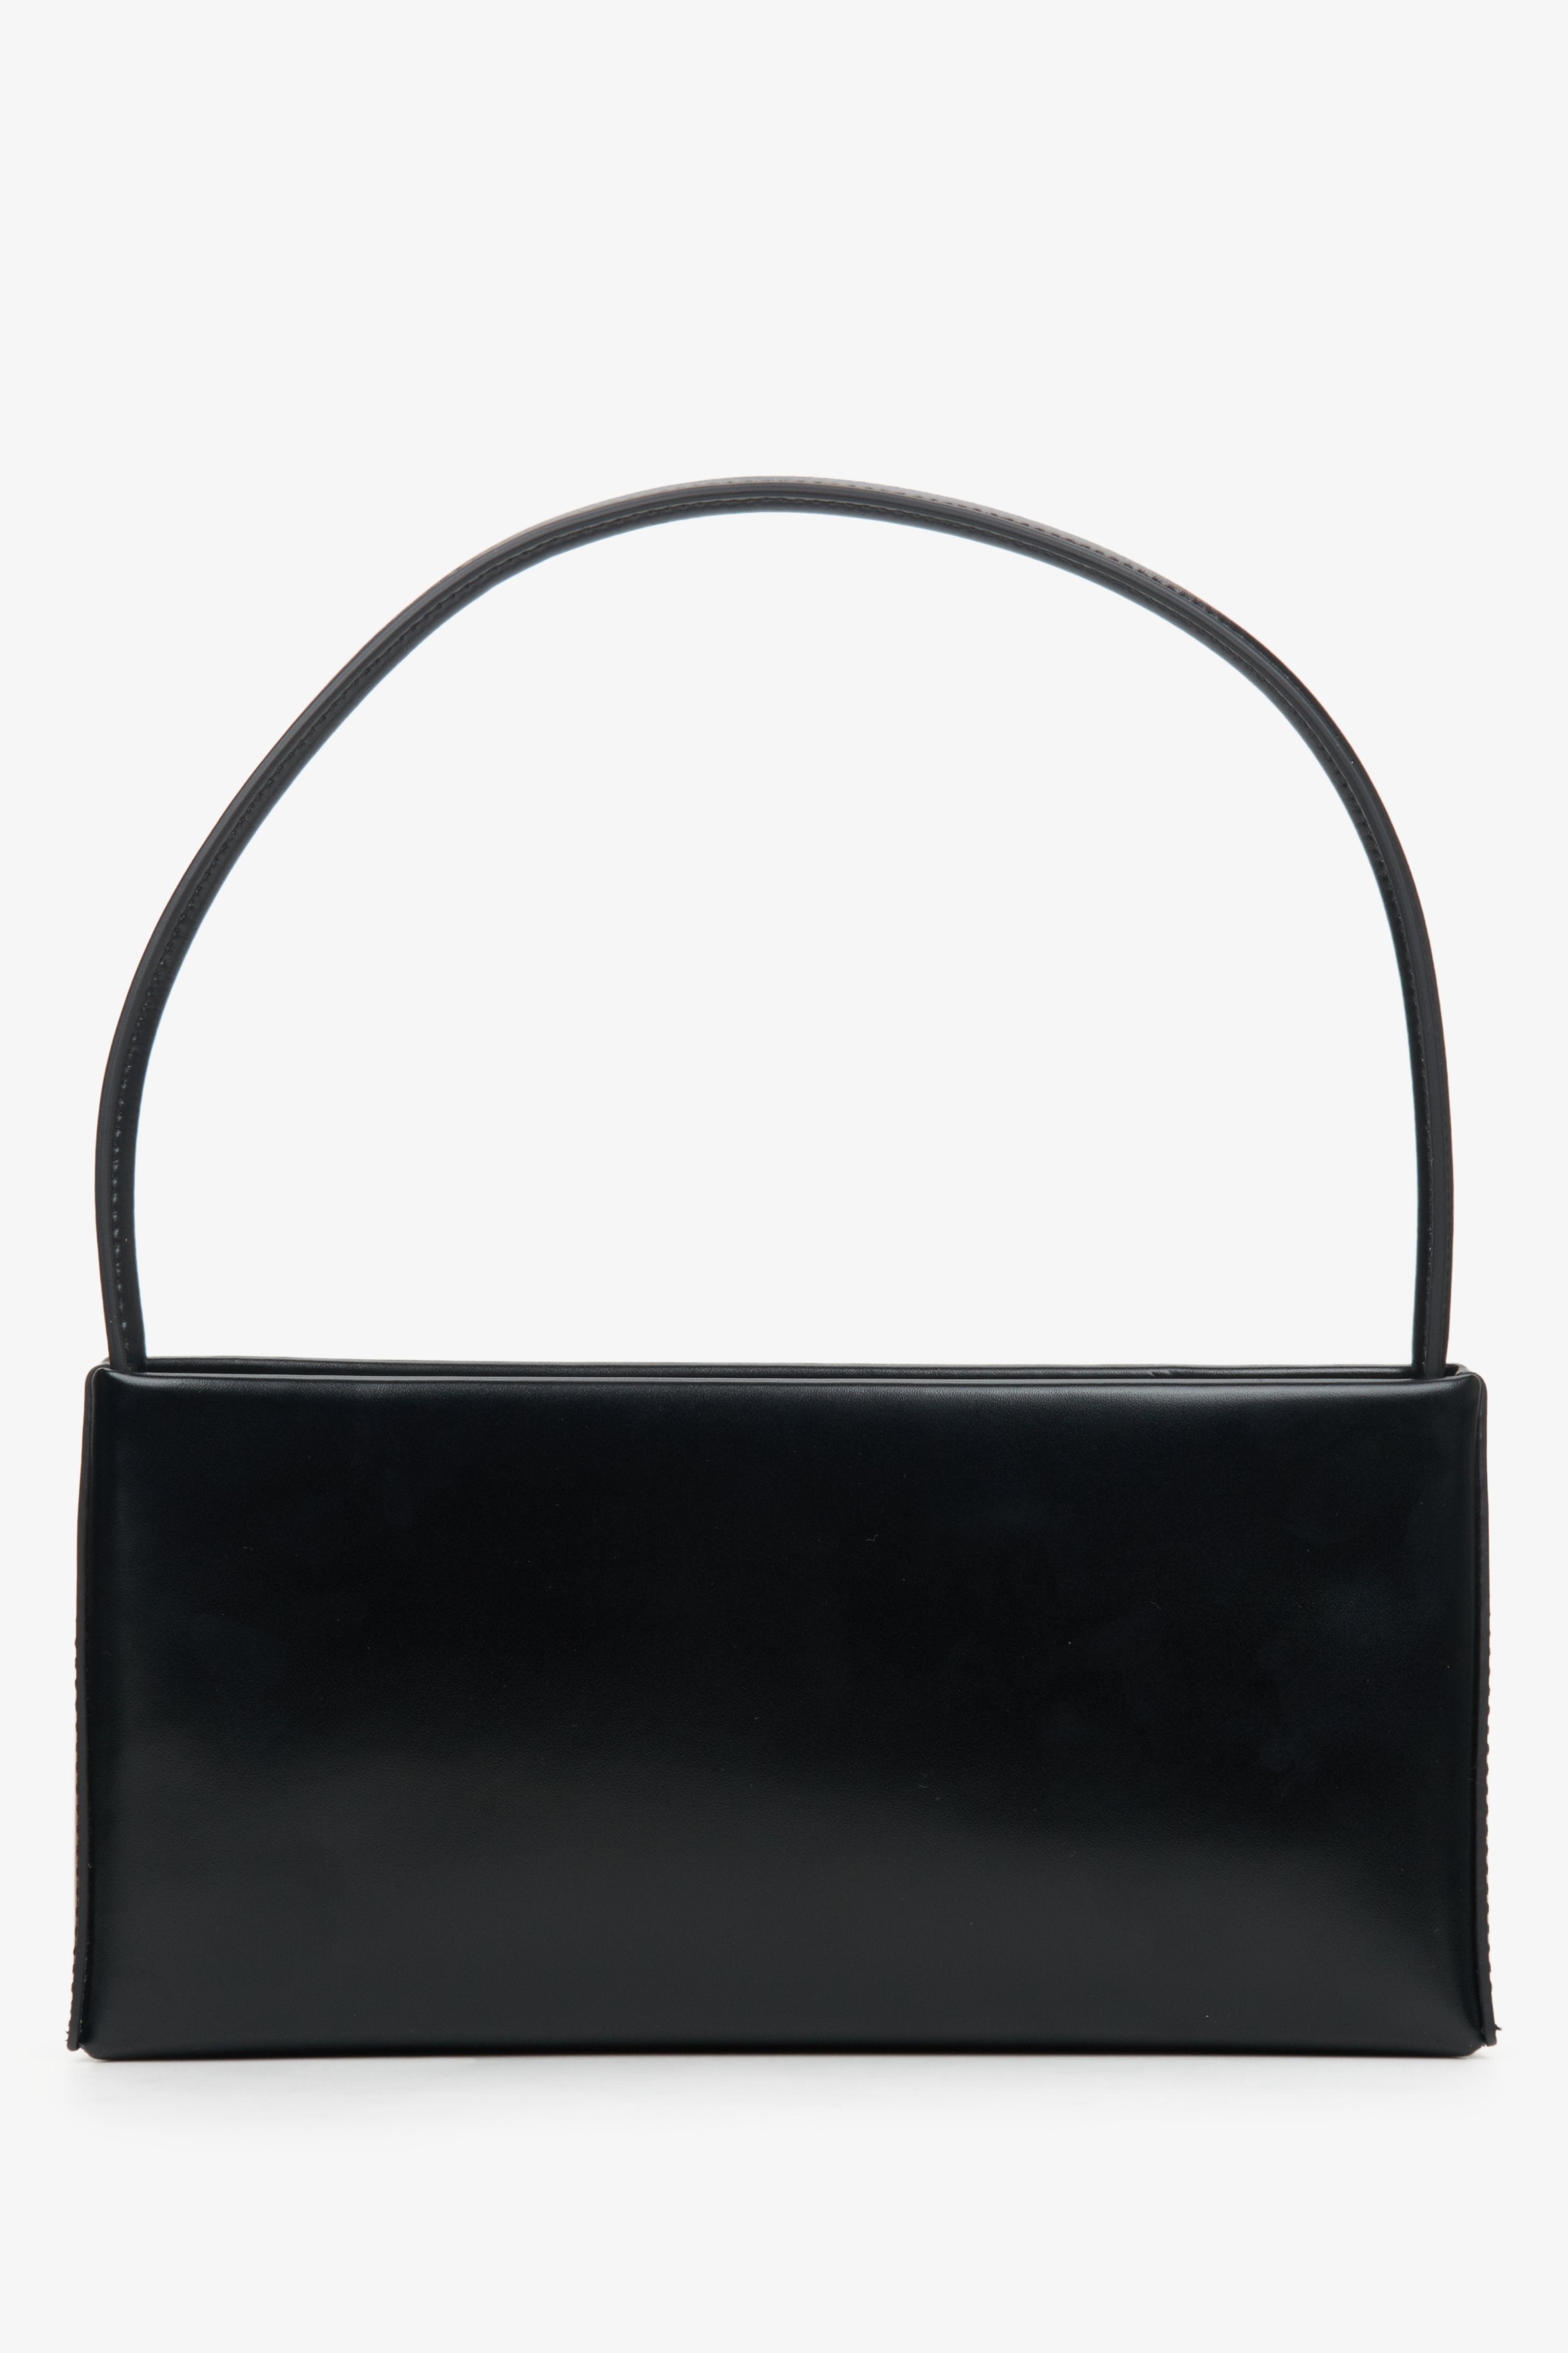 Black leather women's handbag - reverse.